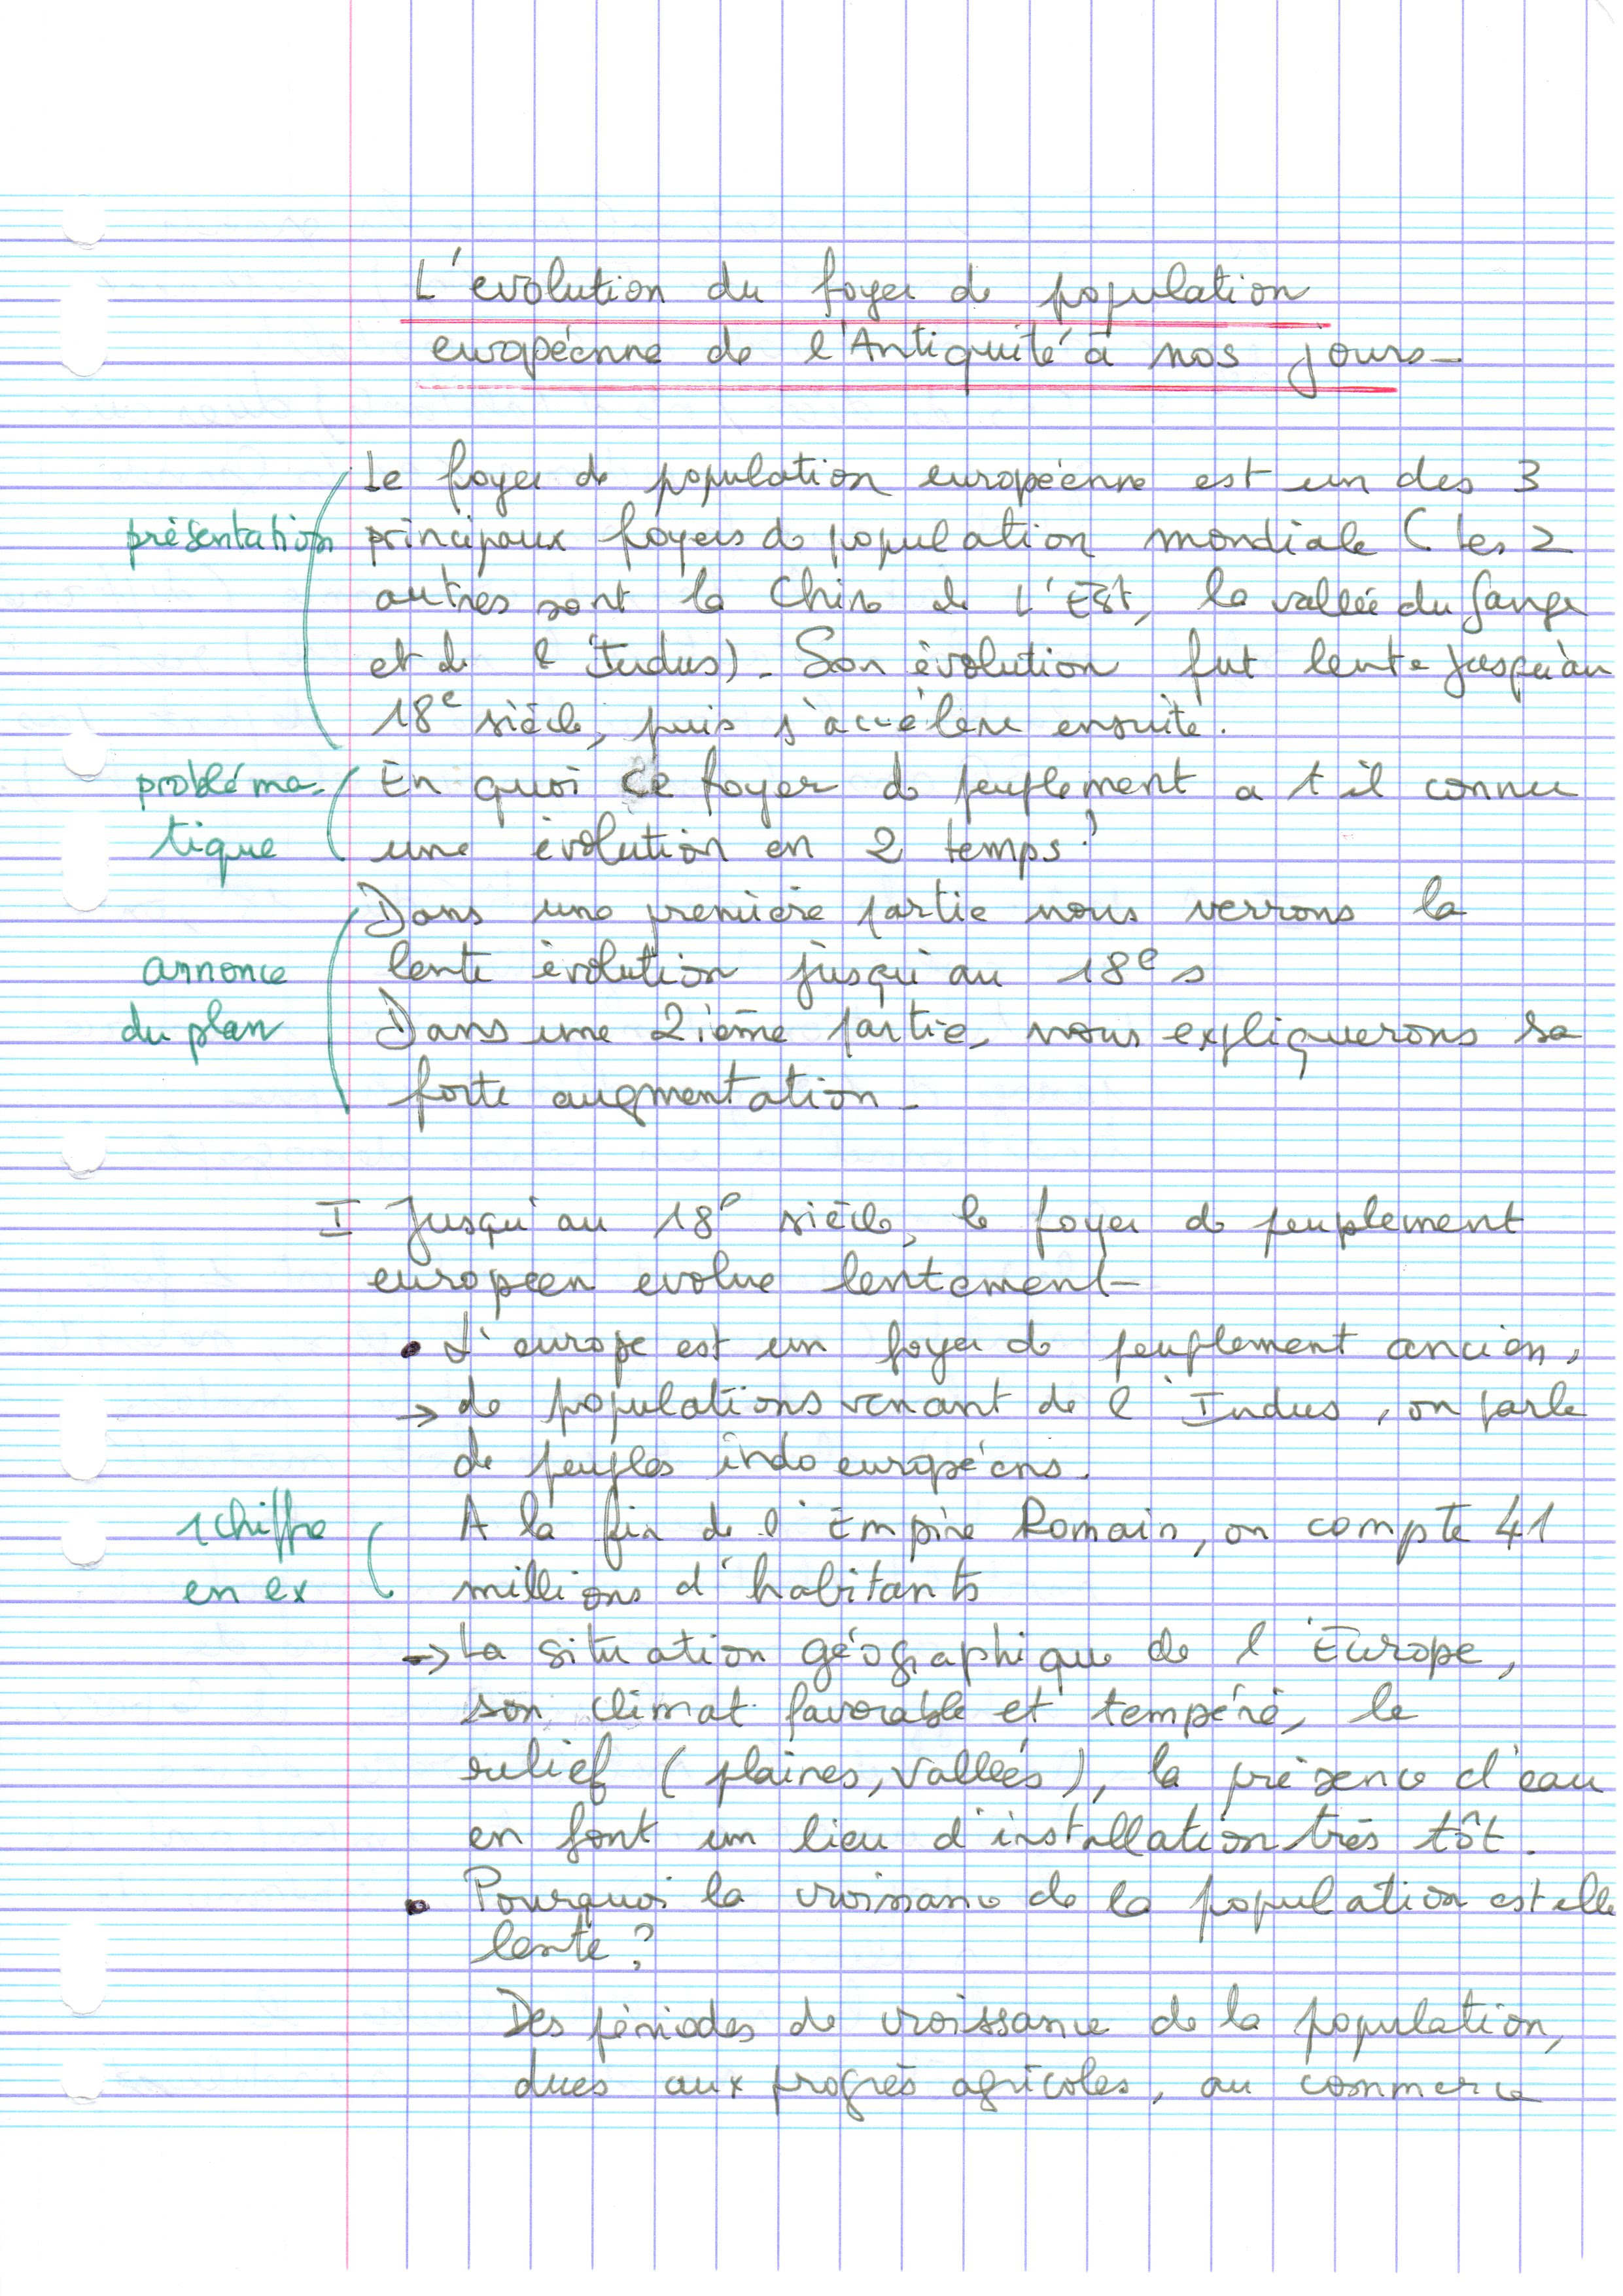 dissertation examples en francais